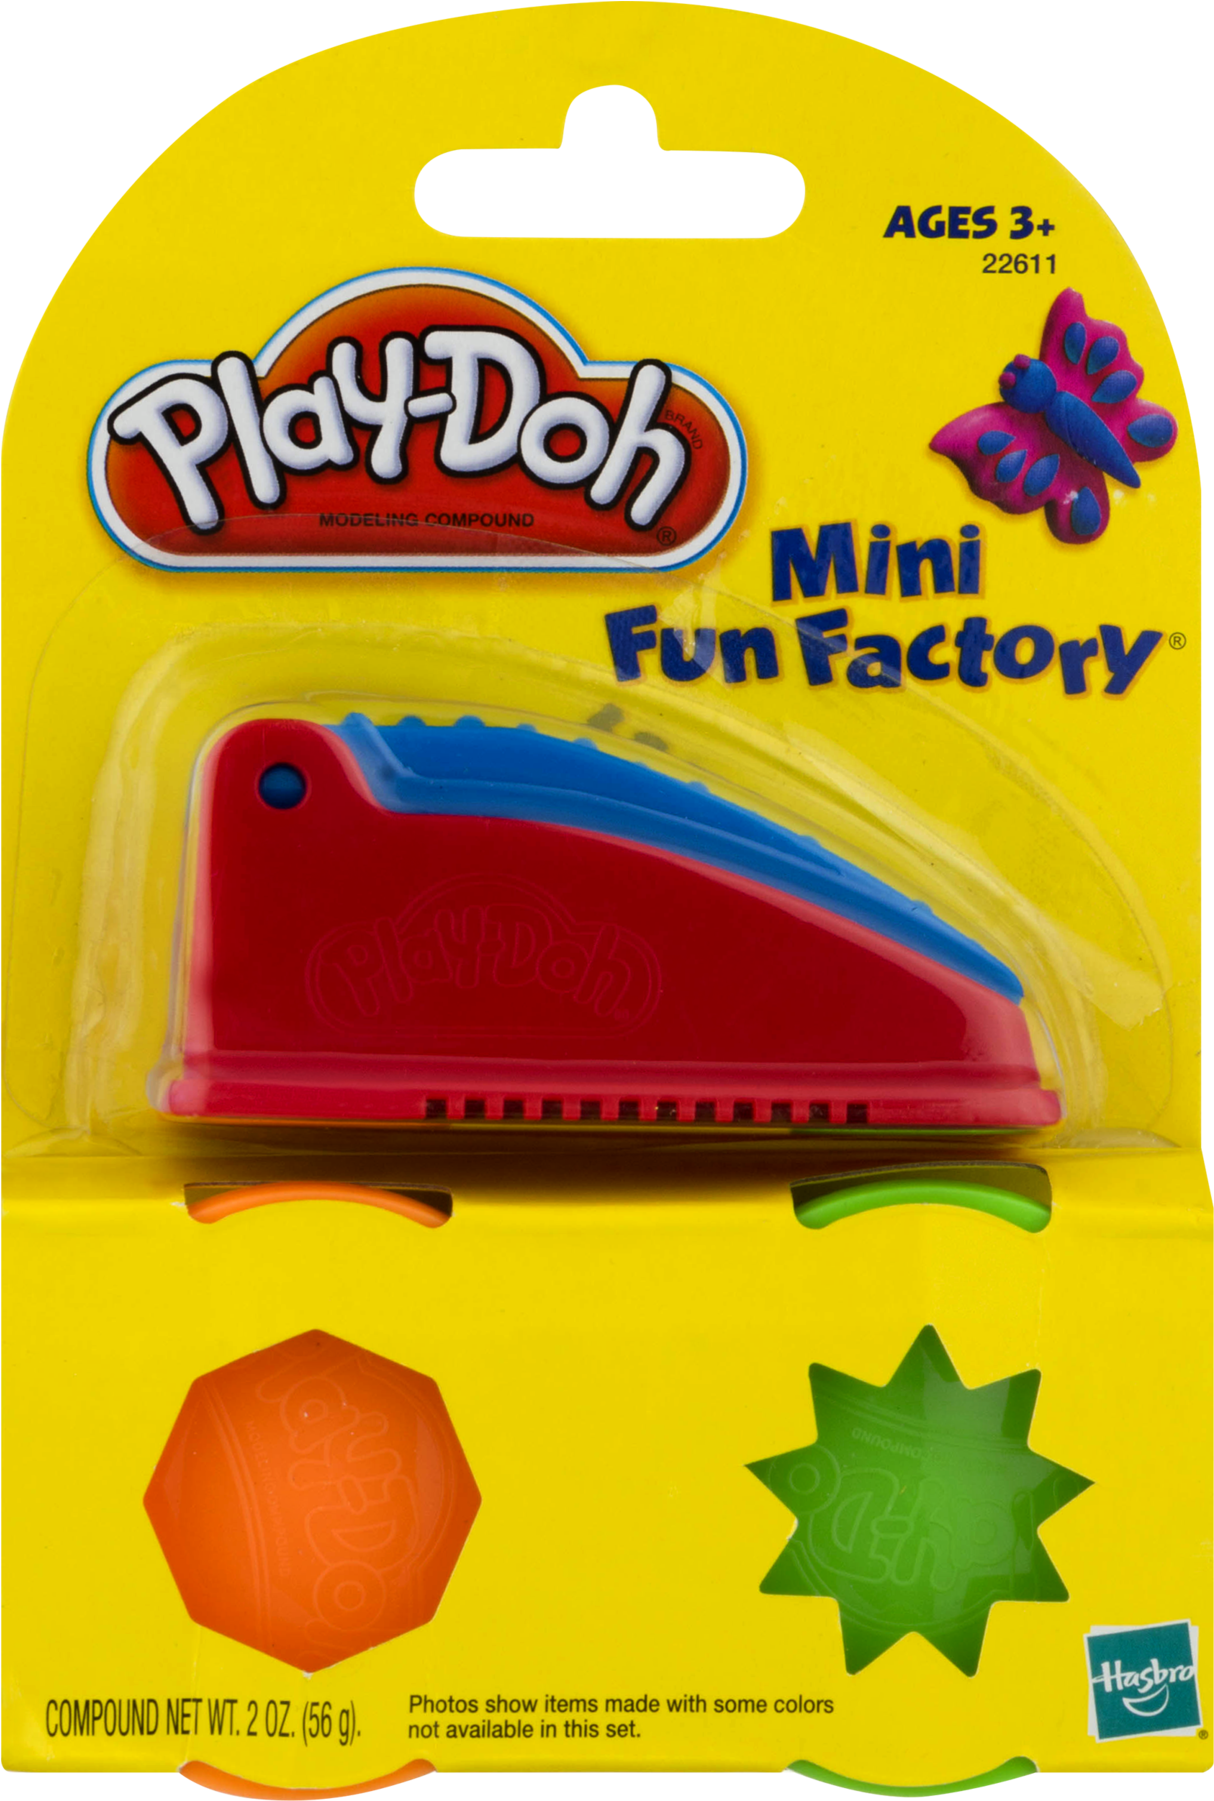 Play Doh Mini Fun Factory Packaging